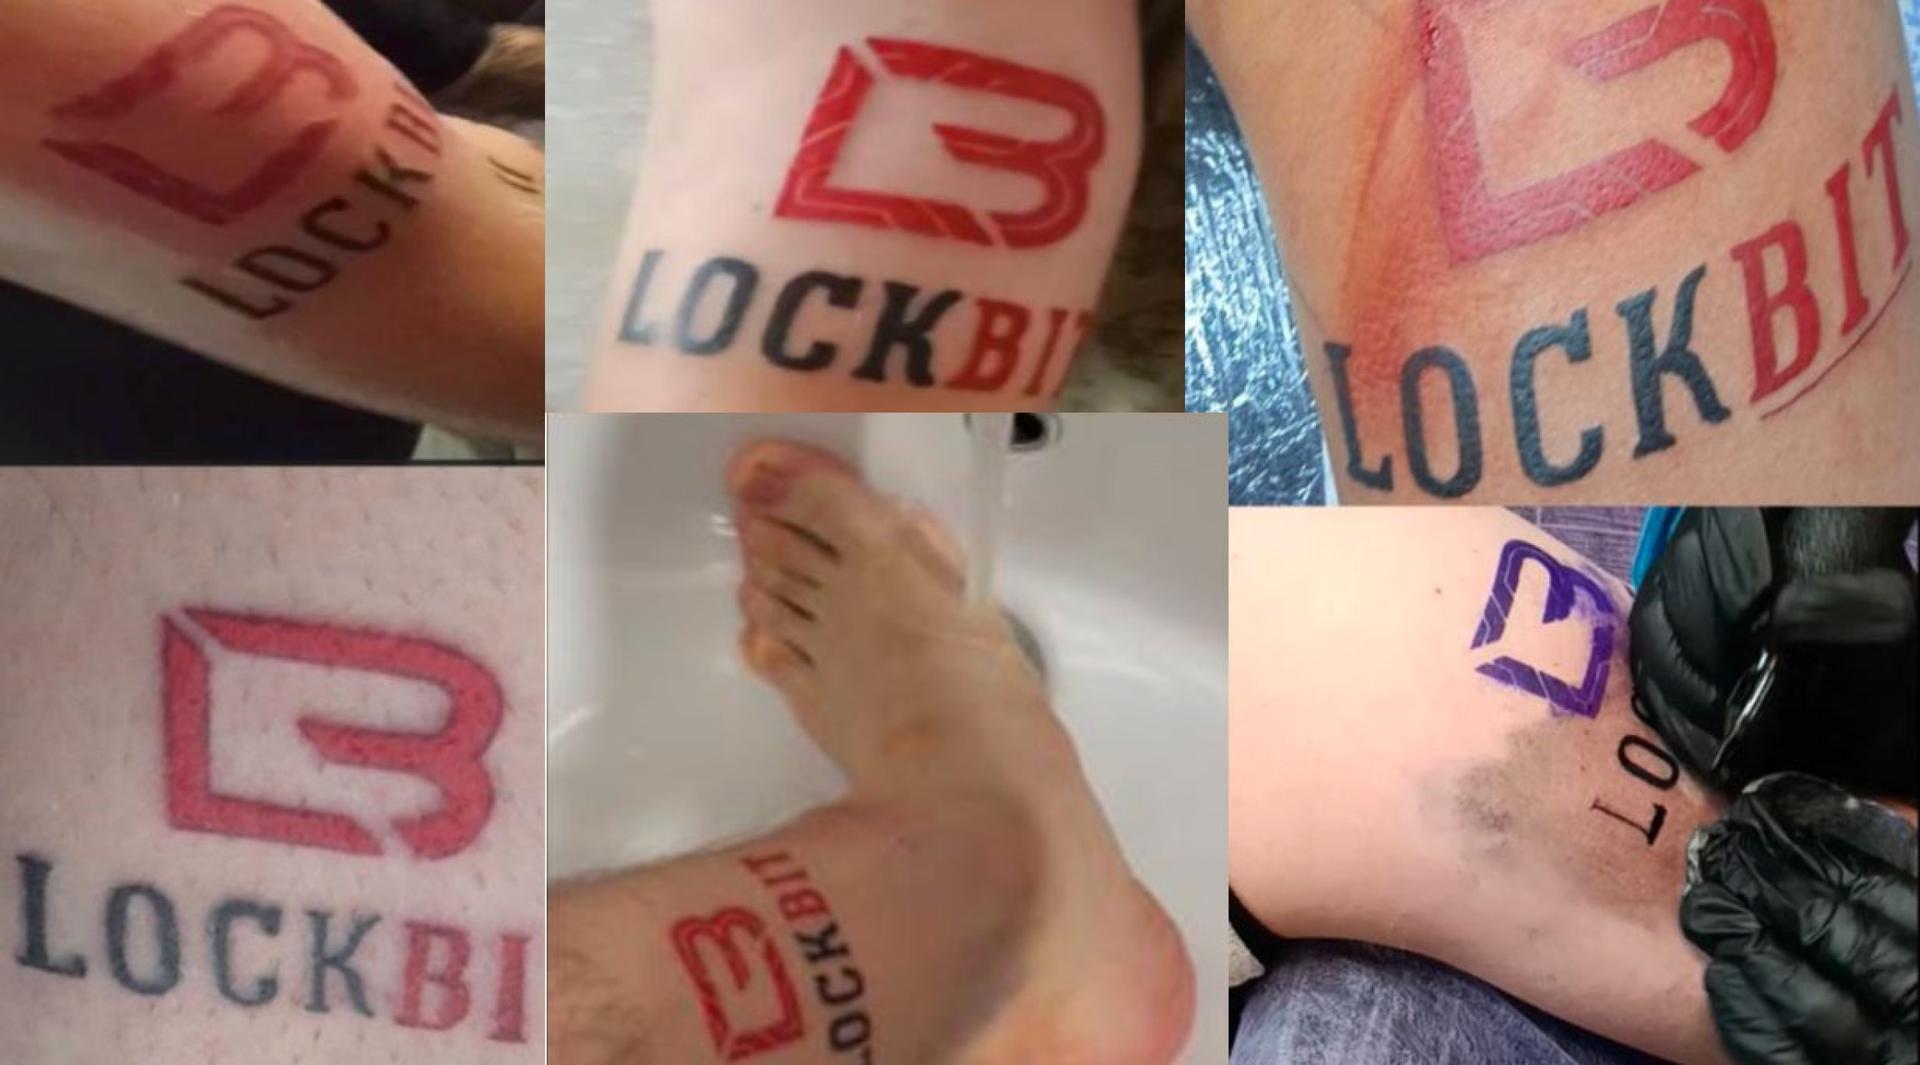 LockBit began offering people $500 to $1,000 to tattoo the LockBit logo on their bodies.